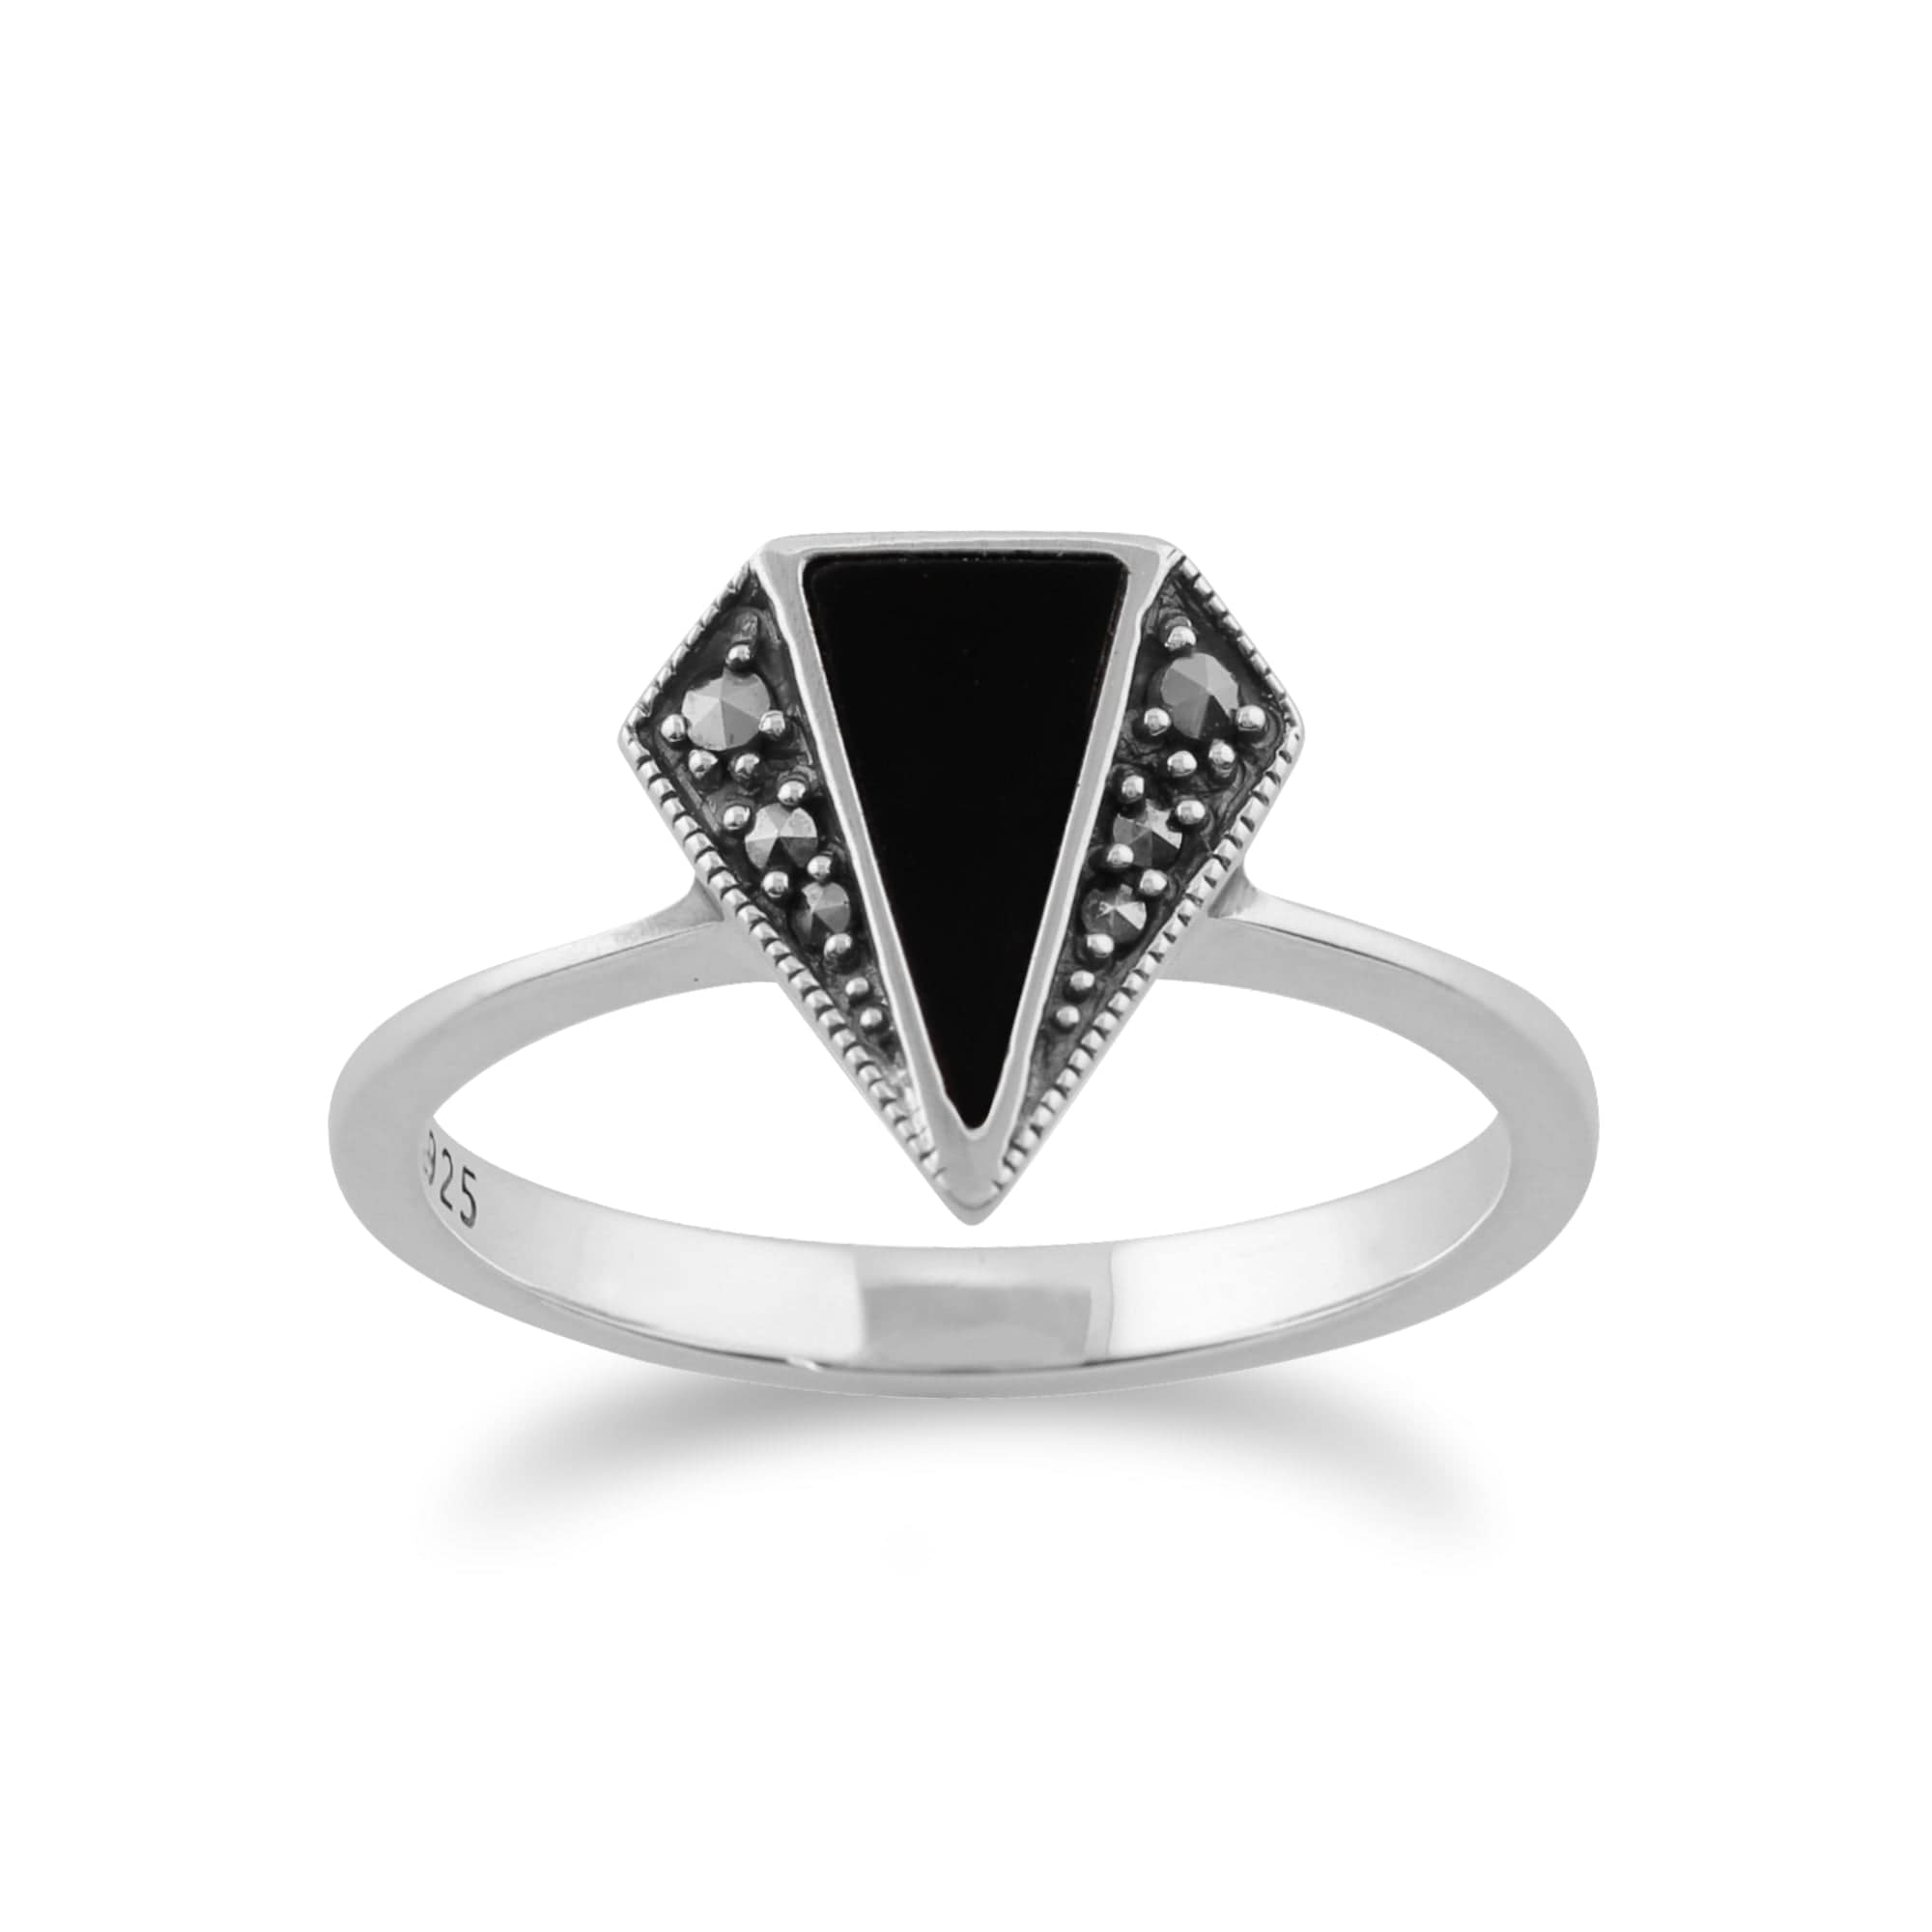 Art Deco Style Triangle Black Onyx & Marcasite Ring in 925 Sterling Silver - Gemondo